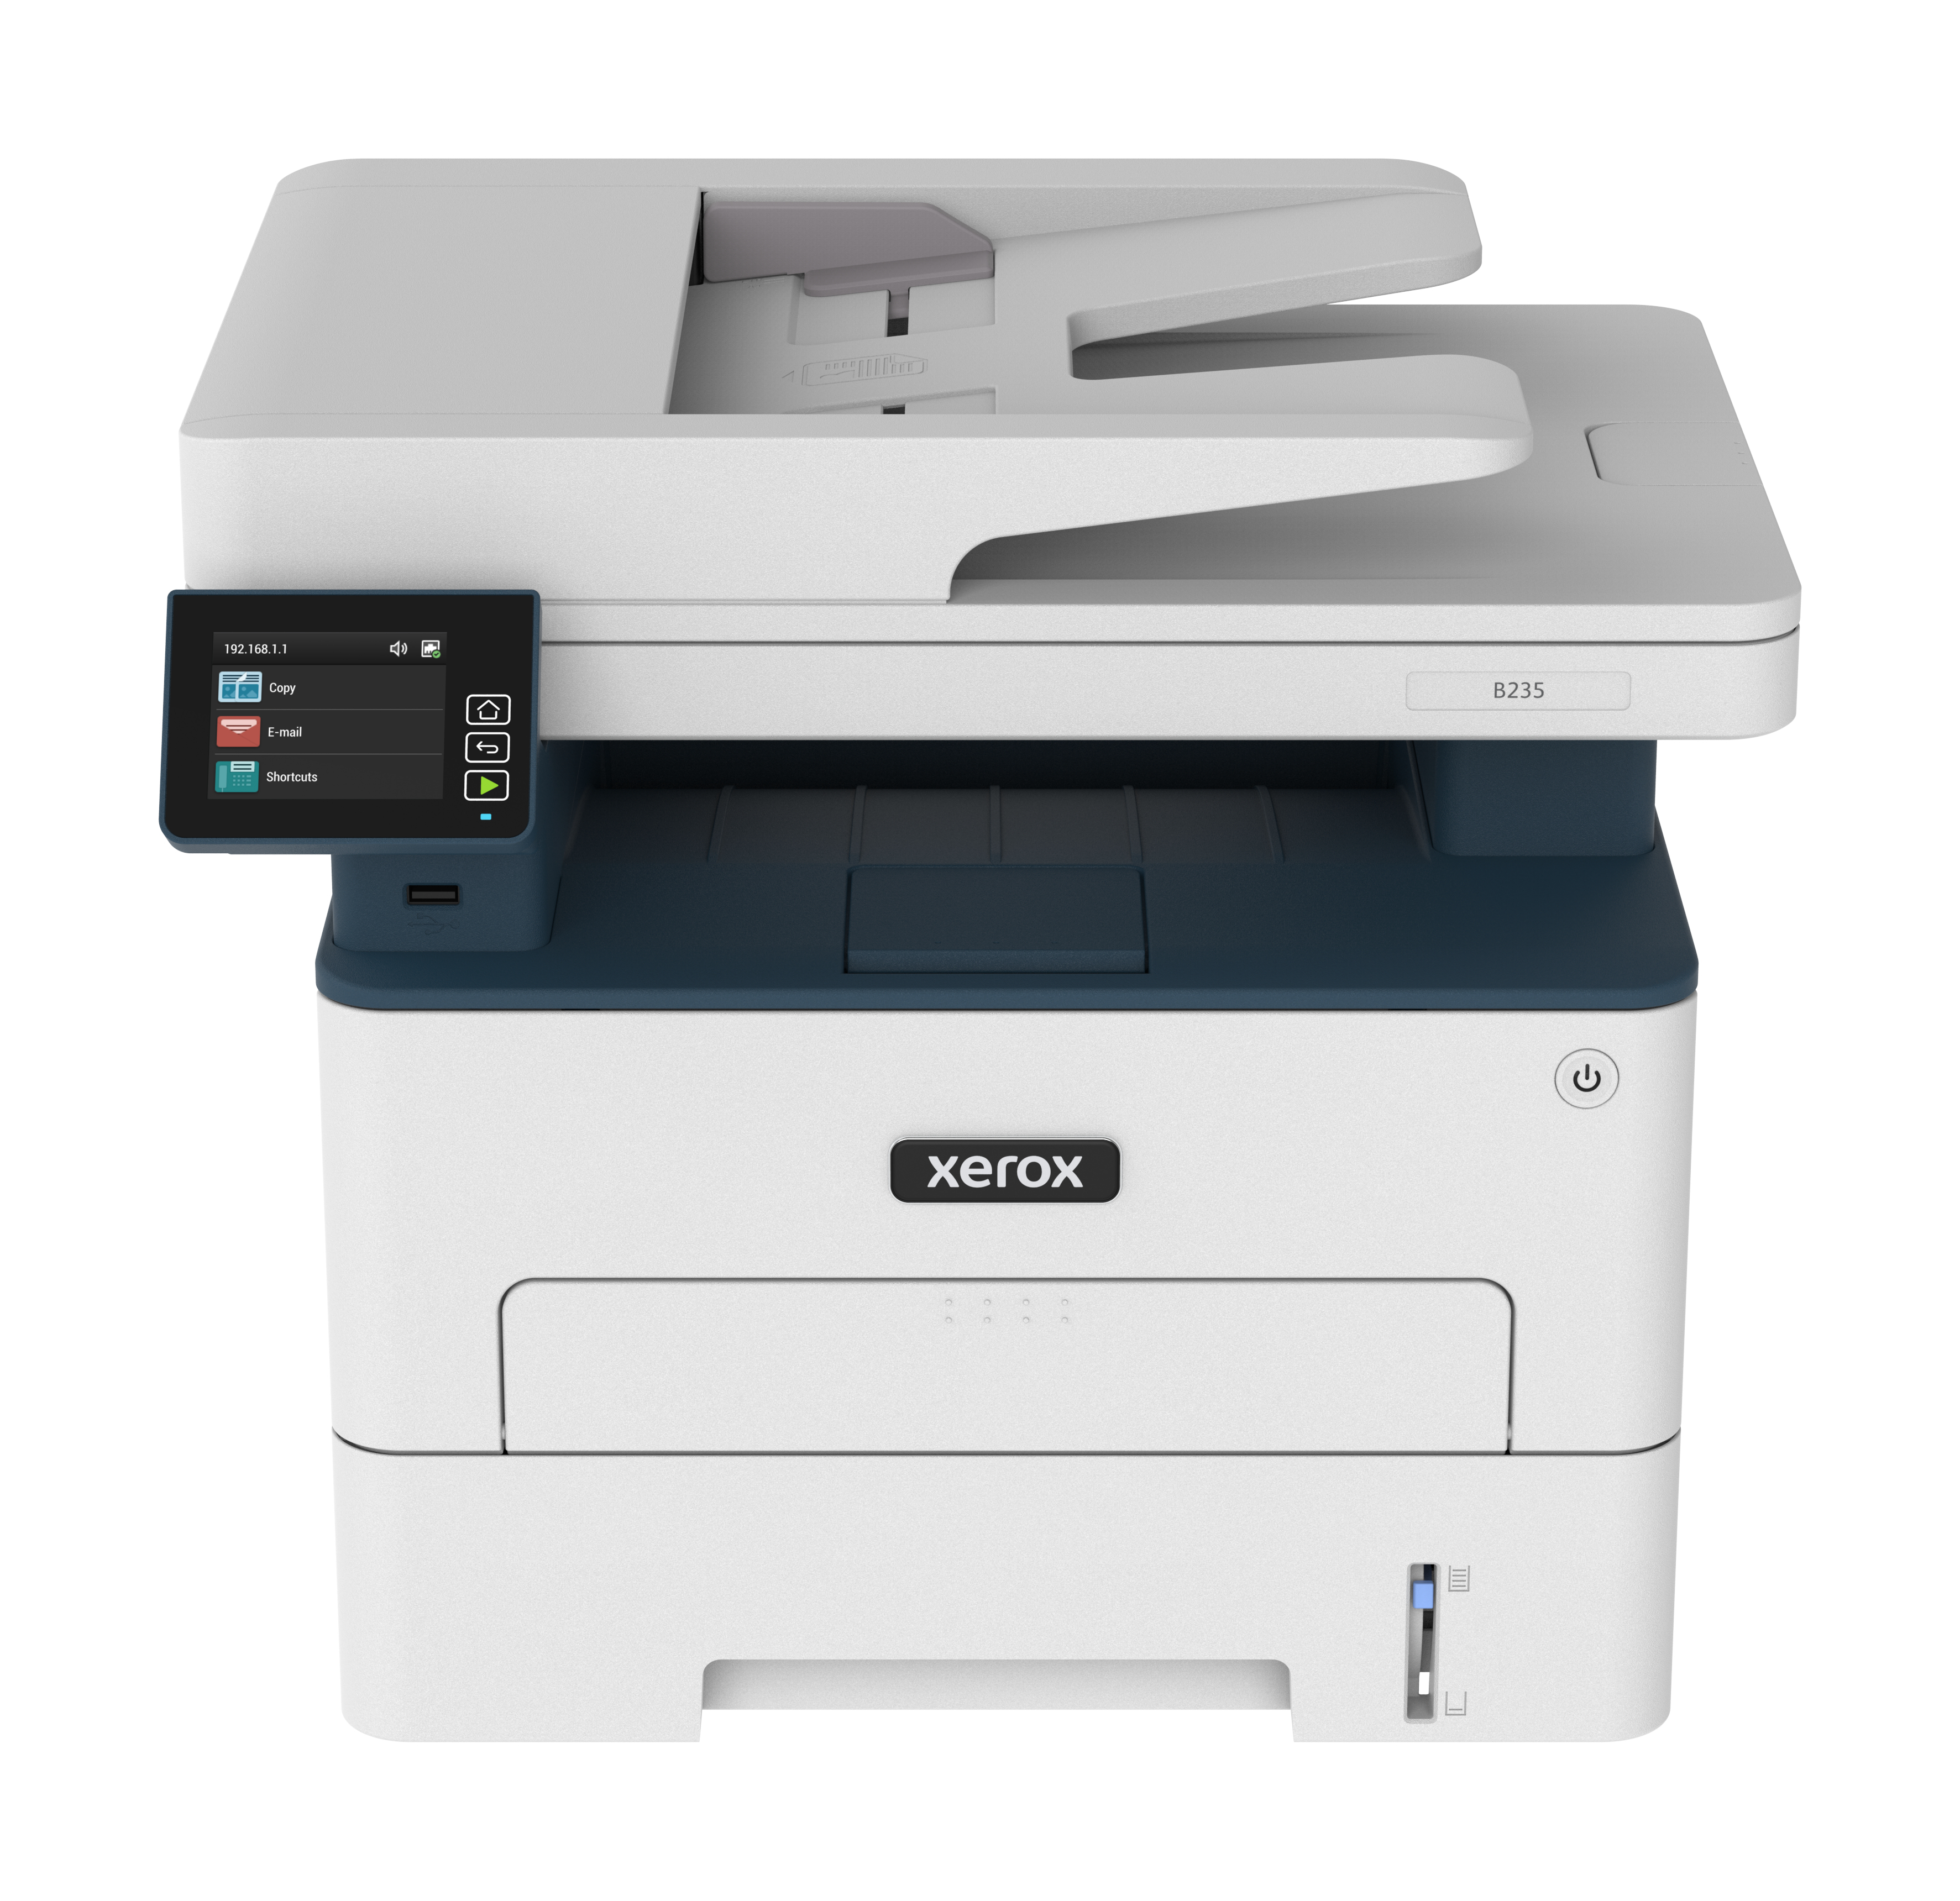 Xerox B235 A4 34 ppm trådlös dubbelkopiering/utskrift/scanning/fax PS3 PCL5e/6 ADF 2 magasin Totalt 251 ark